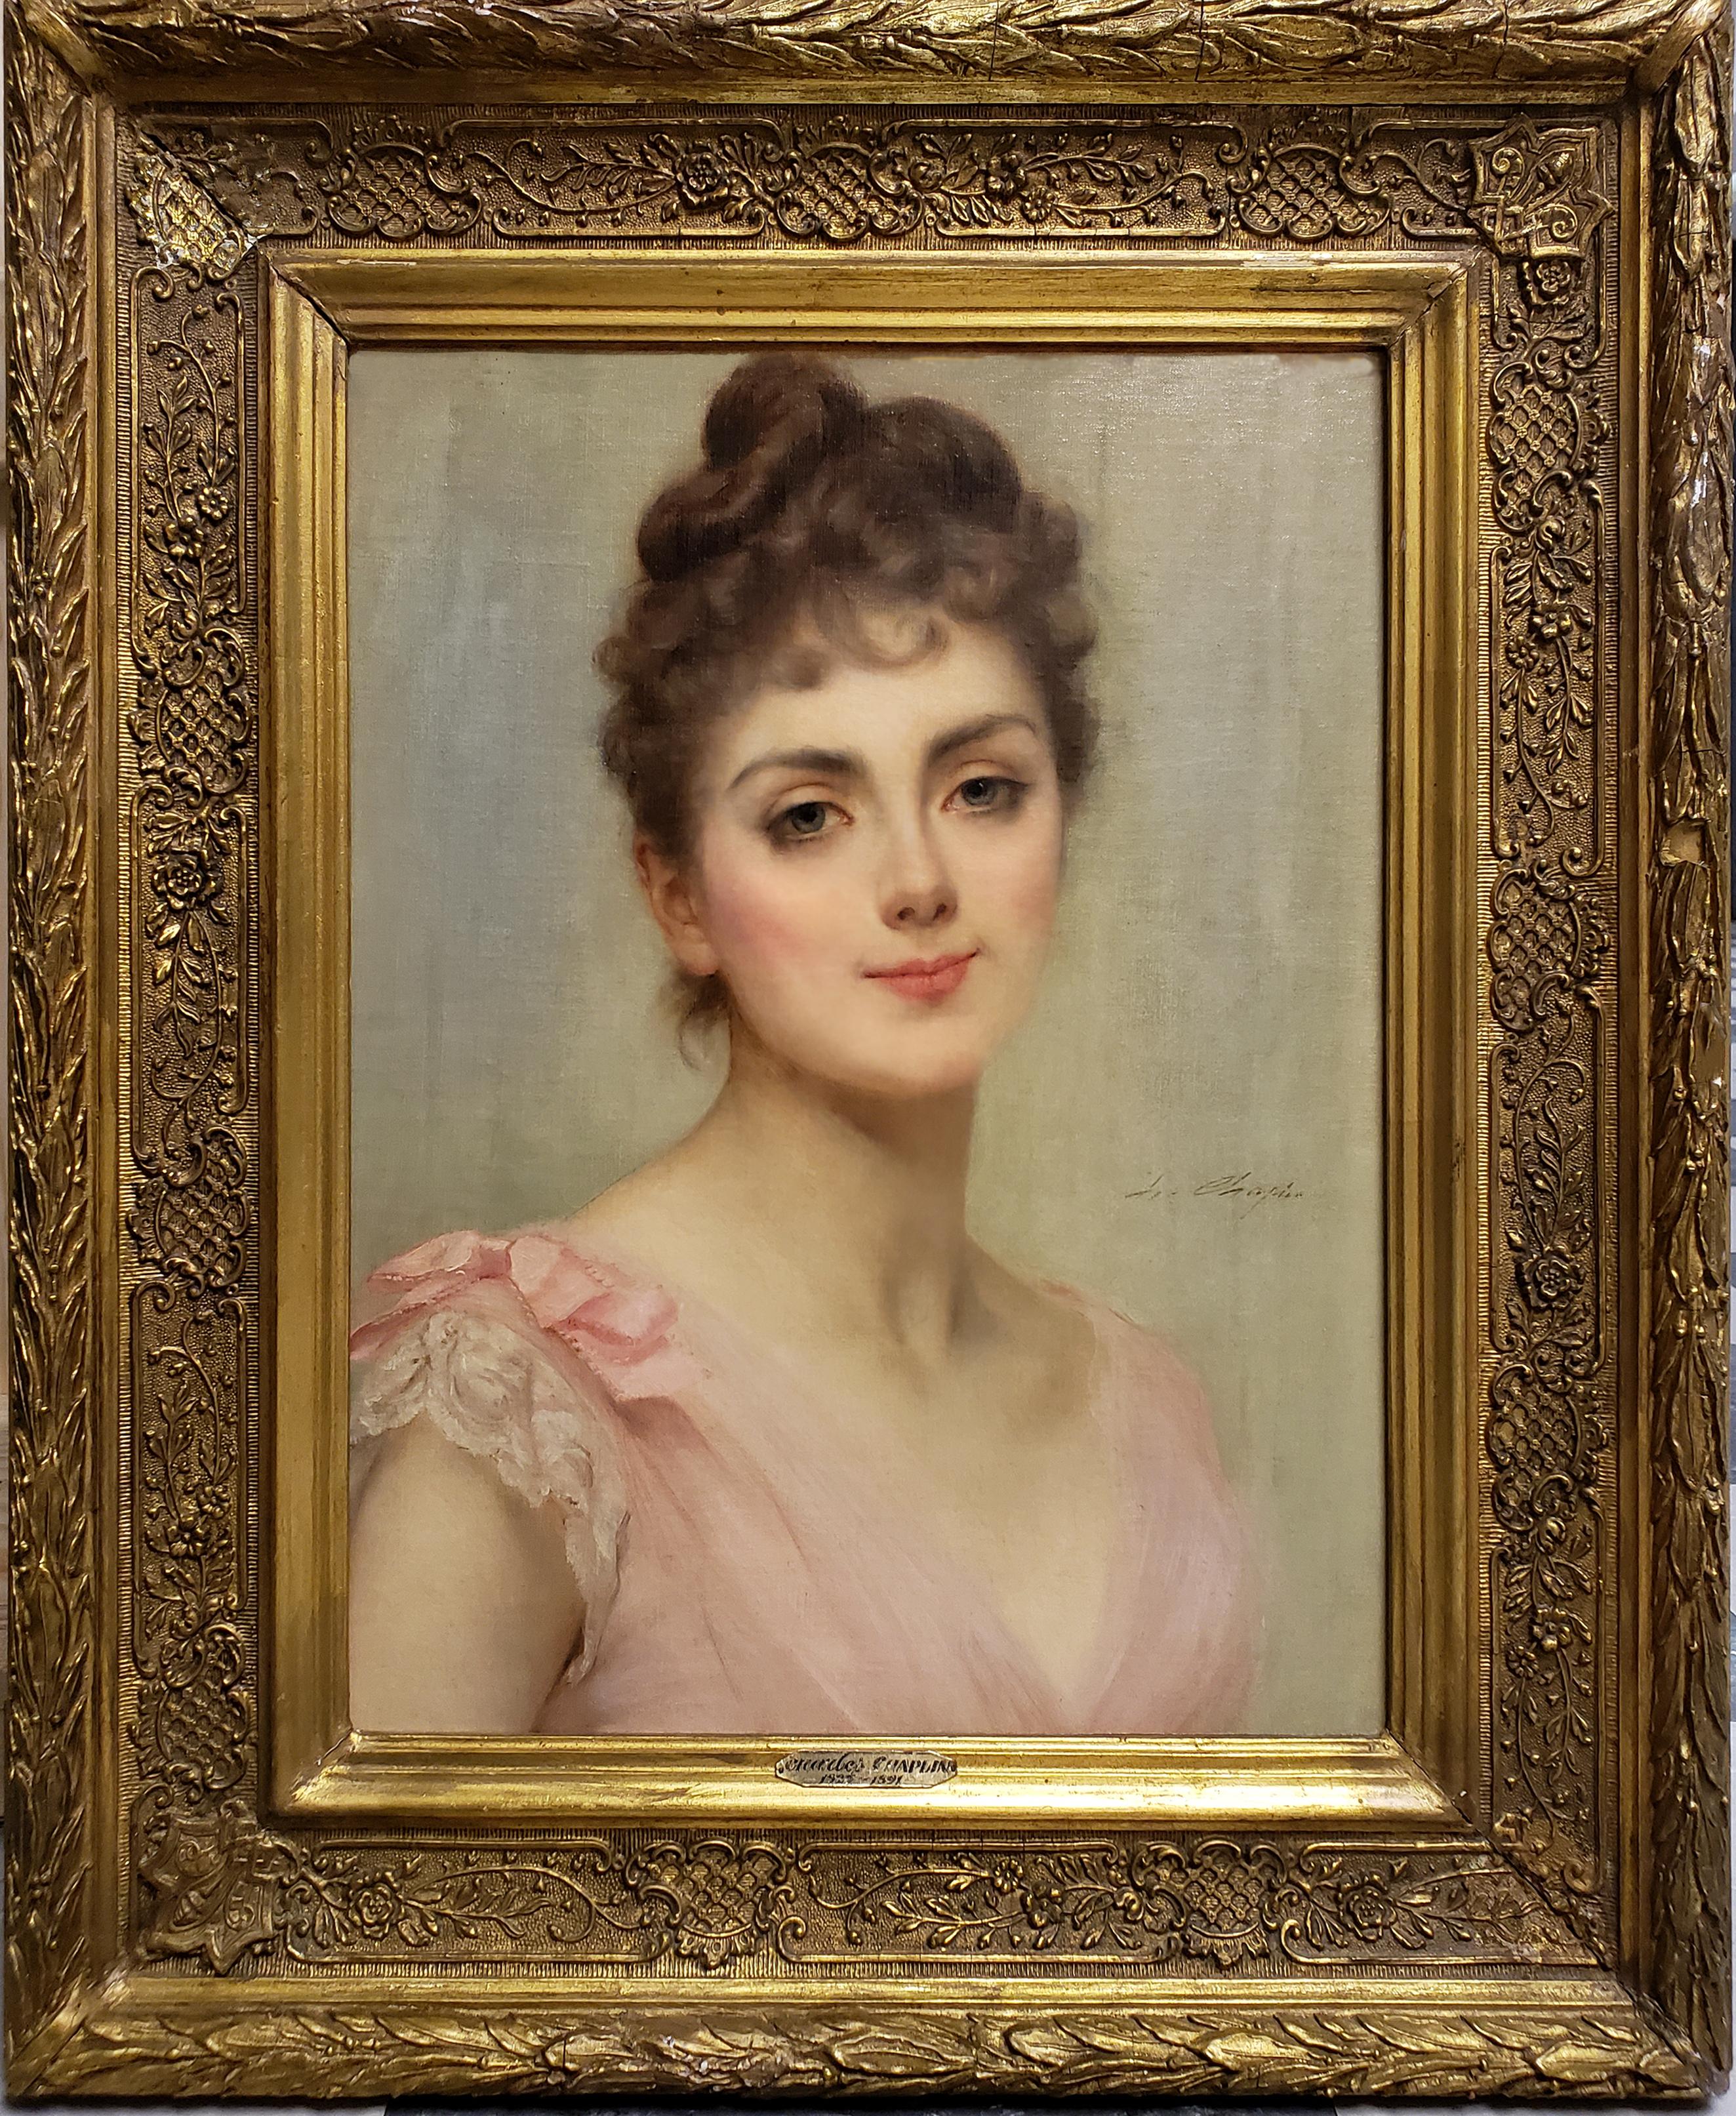 Beautiful Woman, The Coy Look - Painting by Charles Joshua Chaplin